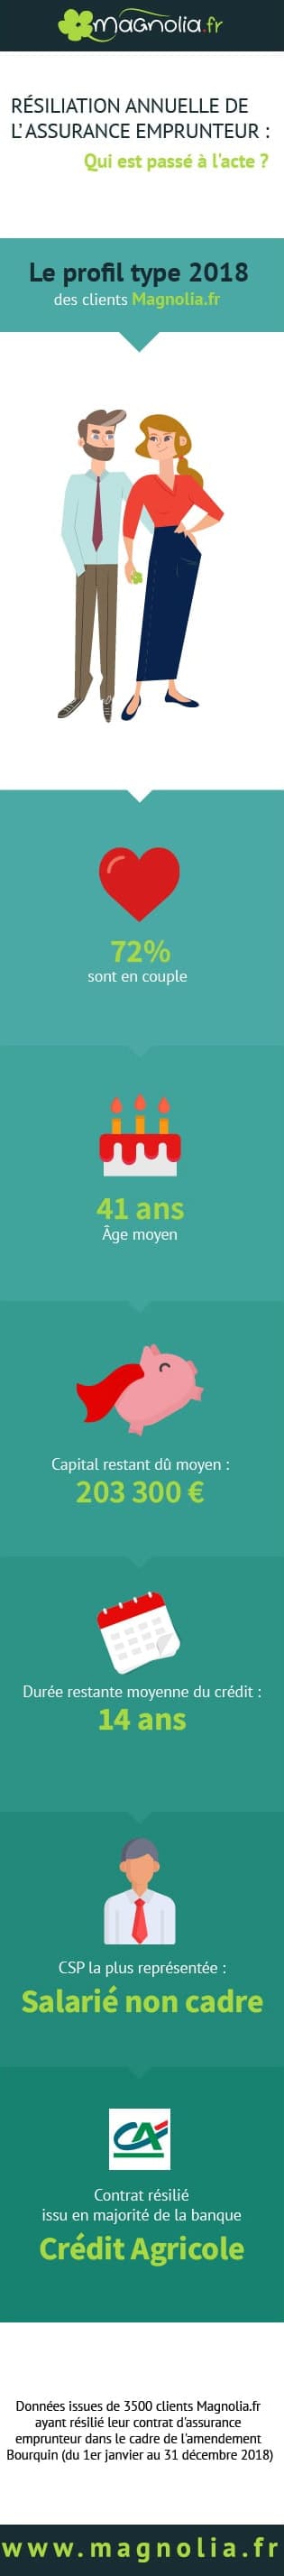 infographie-profil-bourquin-2019-mobile